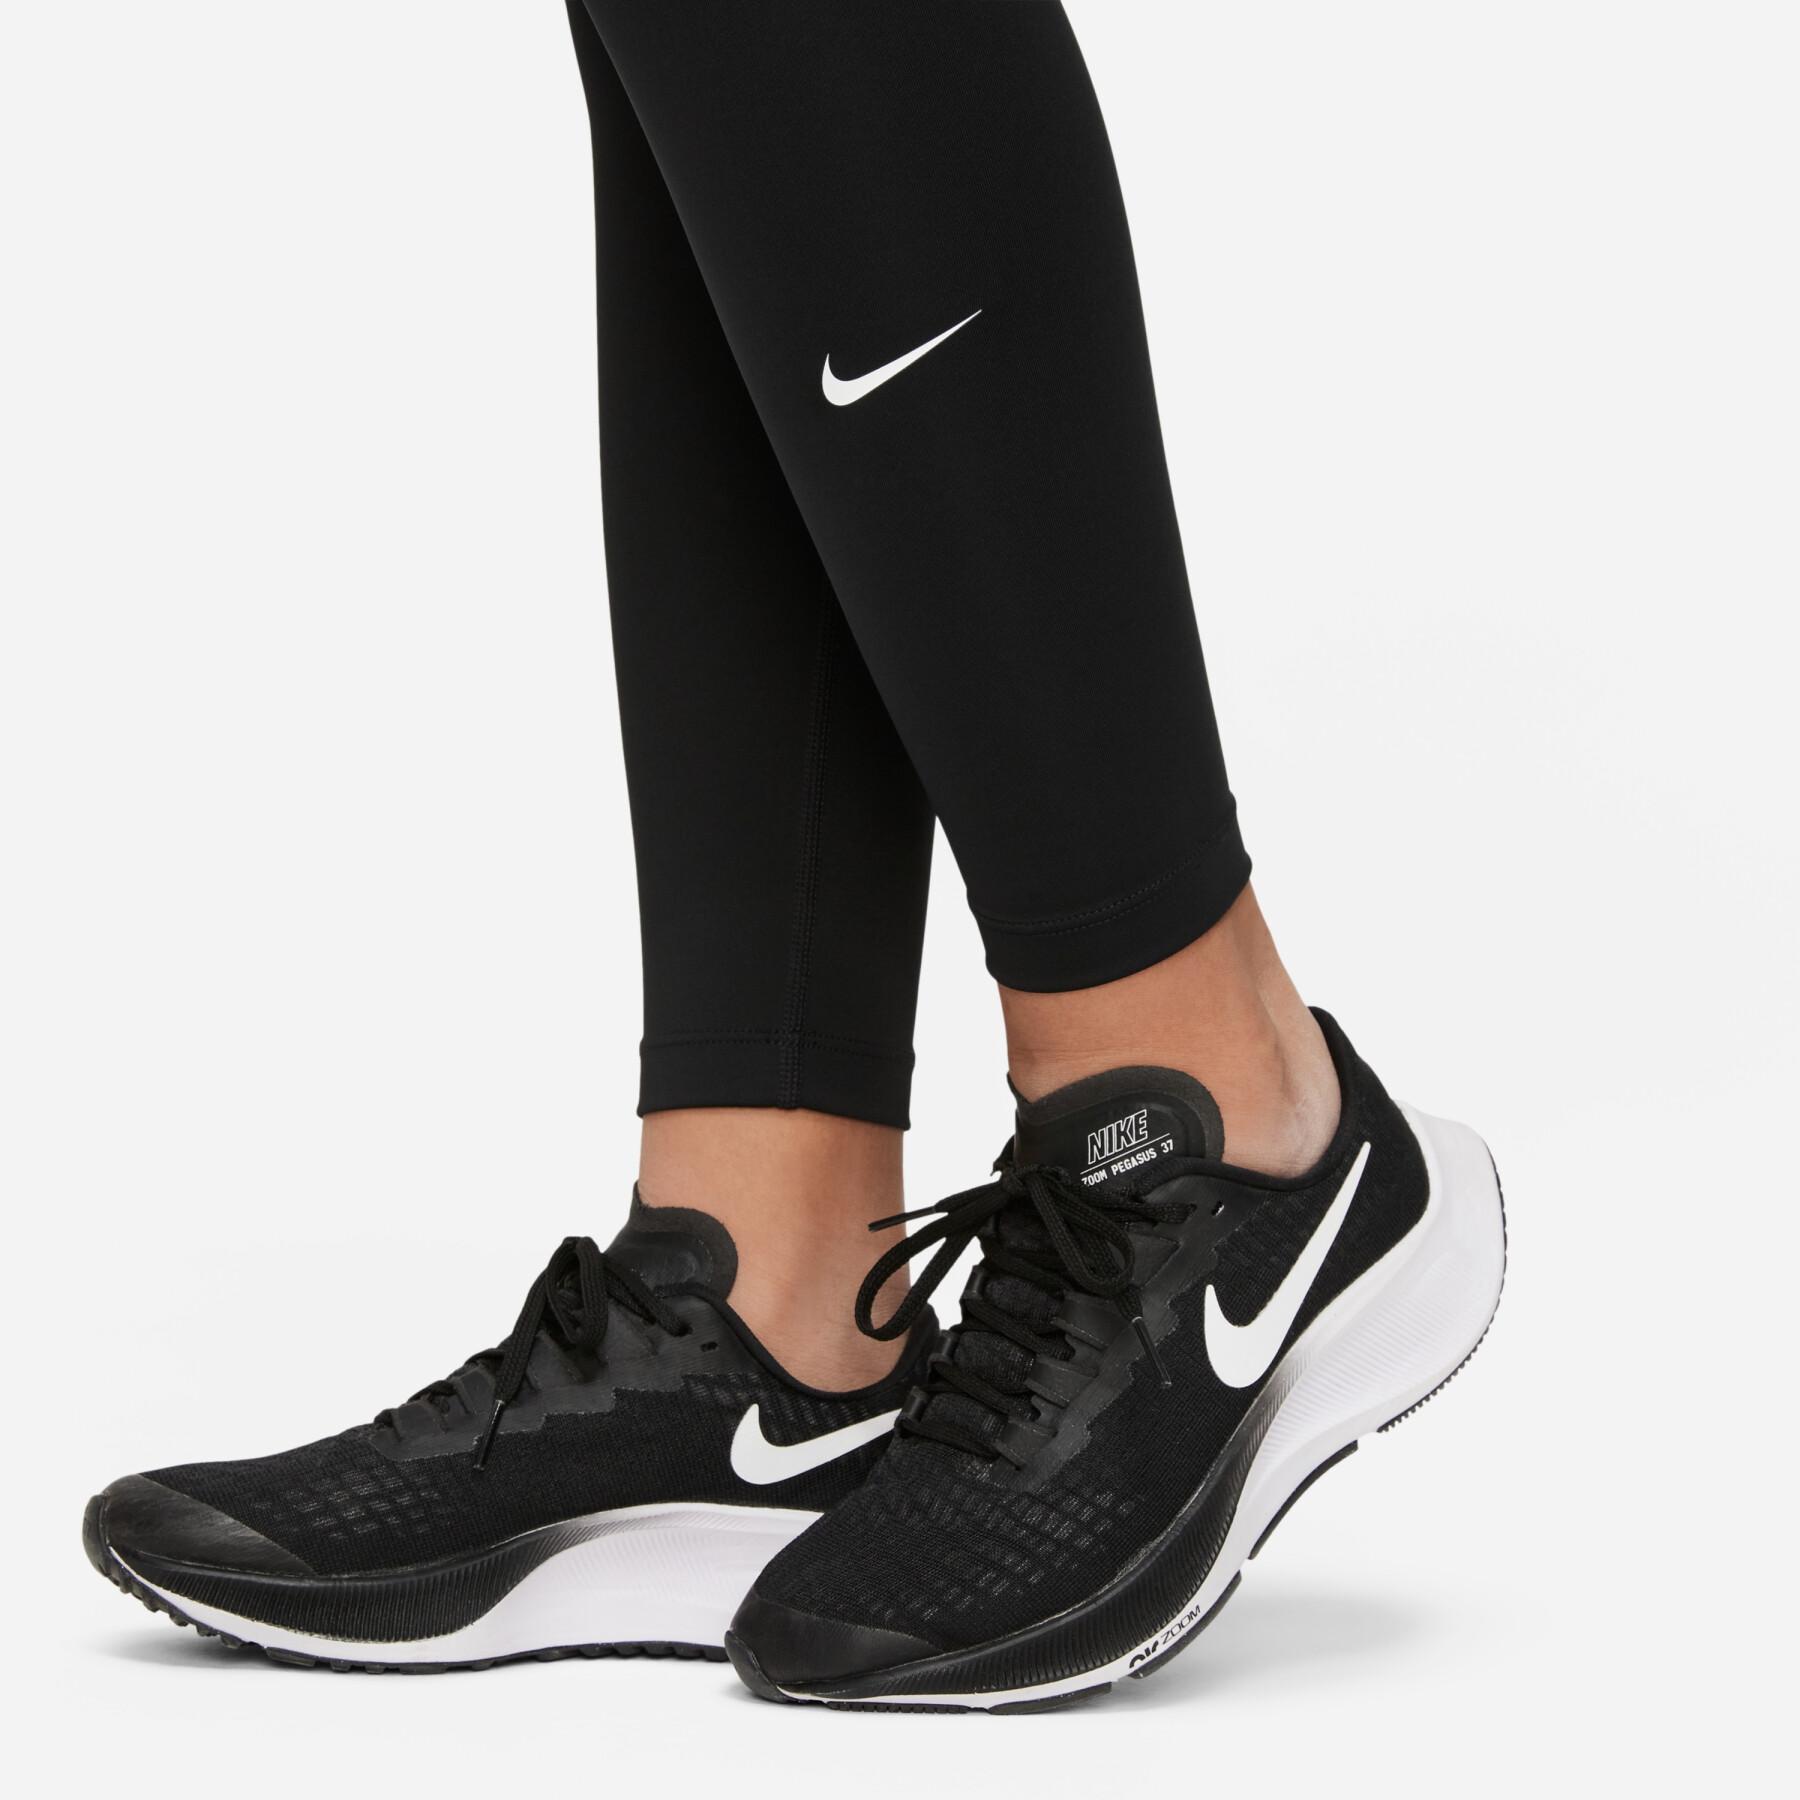 Legging woman Nike NP Dri-Fit MR GRX - Baselayers - Textile - Handball wear